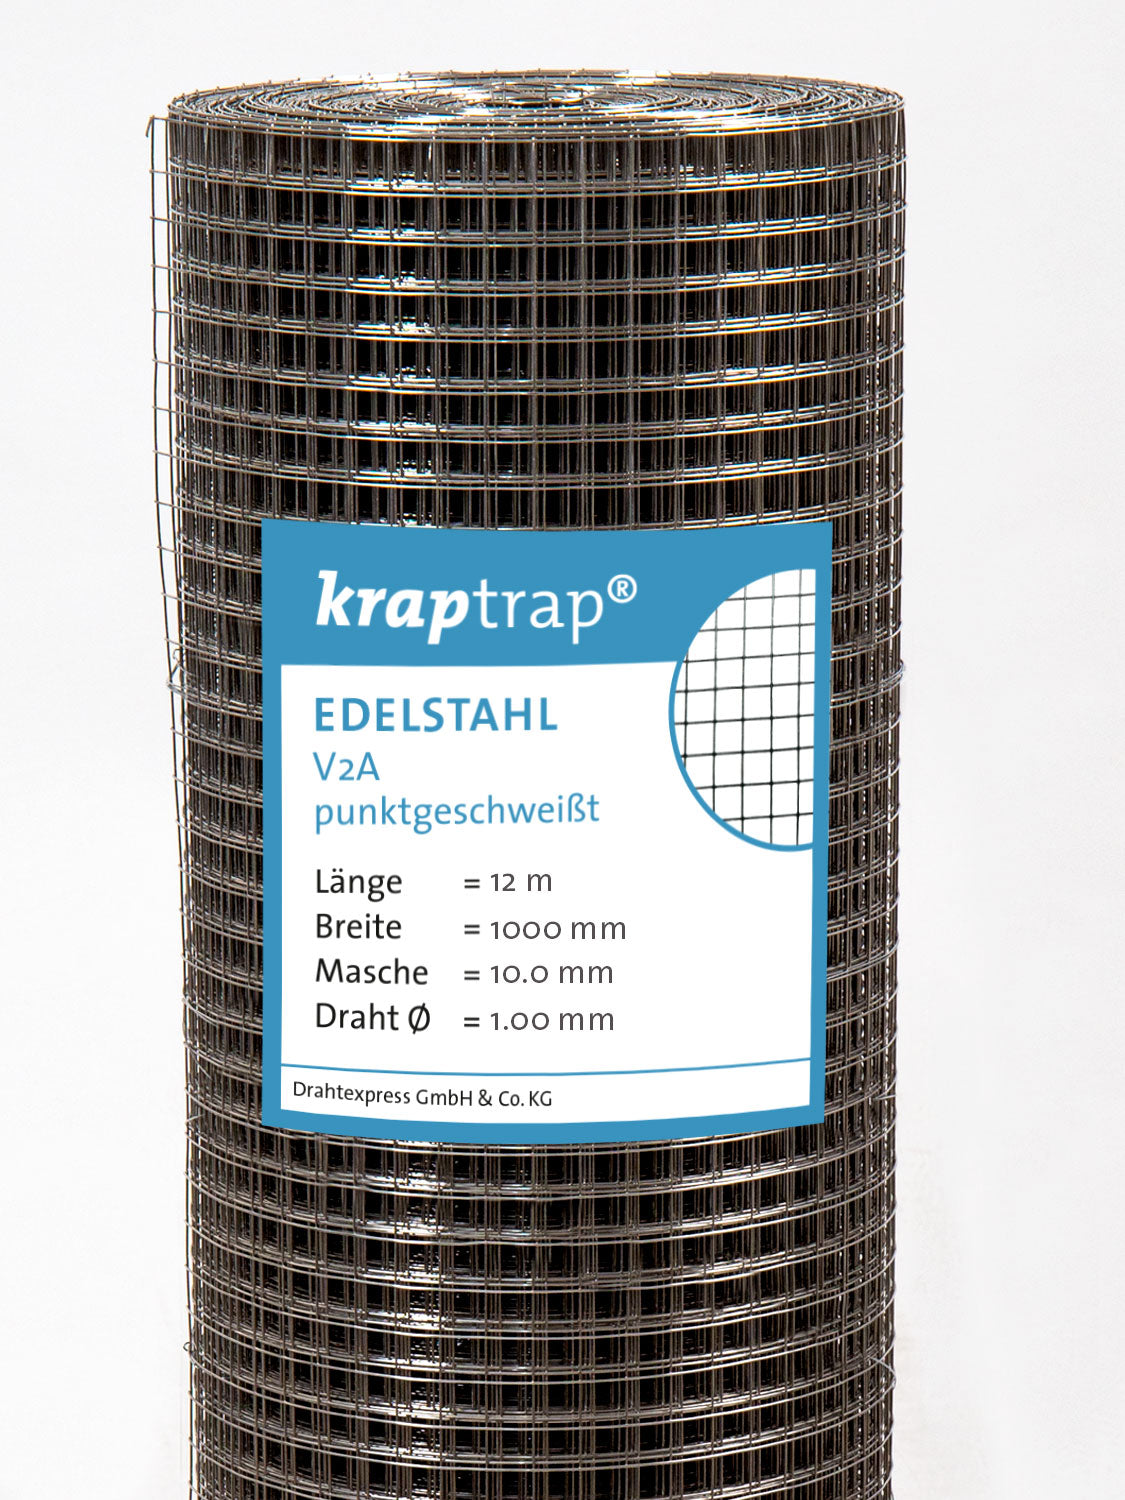 Kraptrap® Edelstahl Volierendraht Drahtgitter V2A 10x10 mm Masche